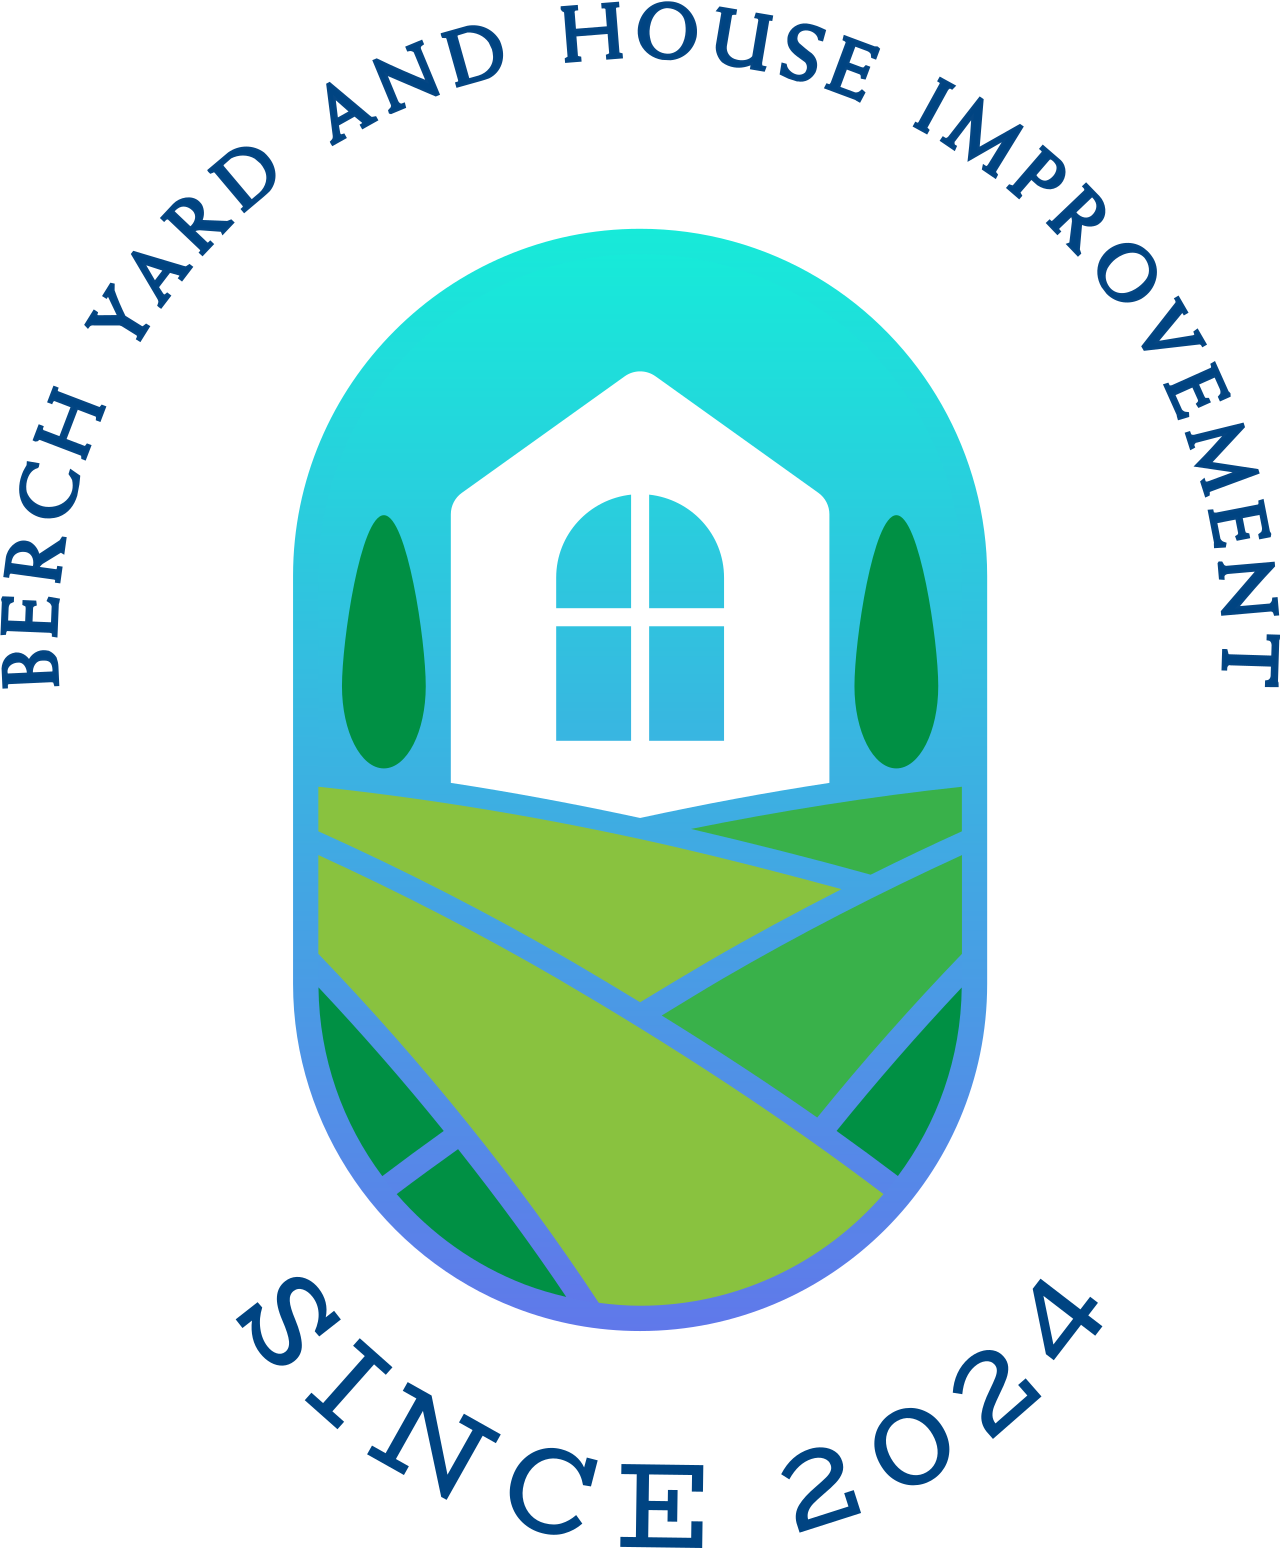 Berch Yard and House Improvement's logo